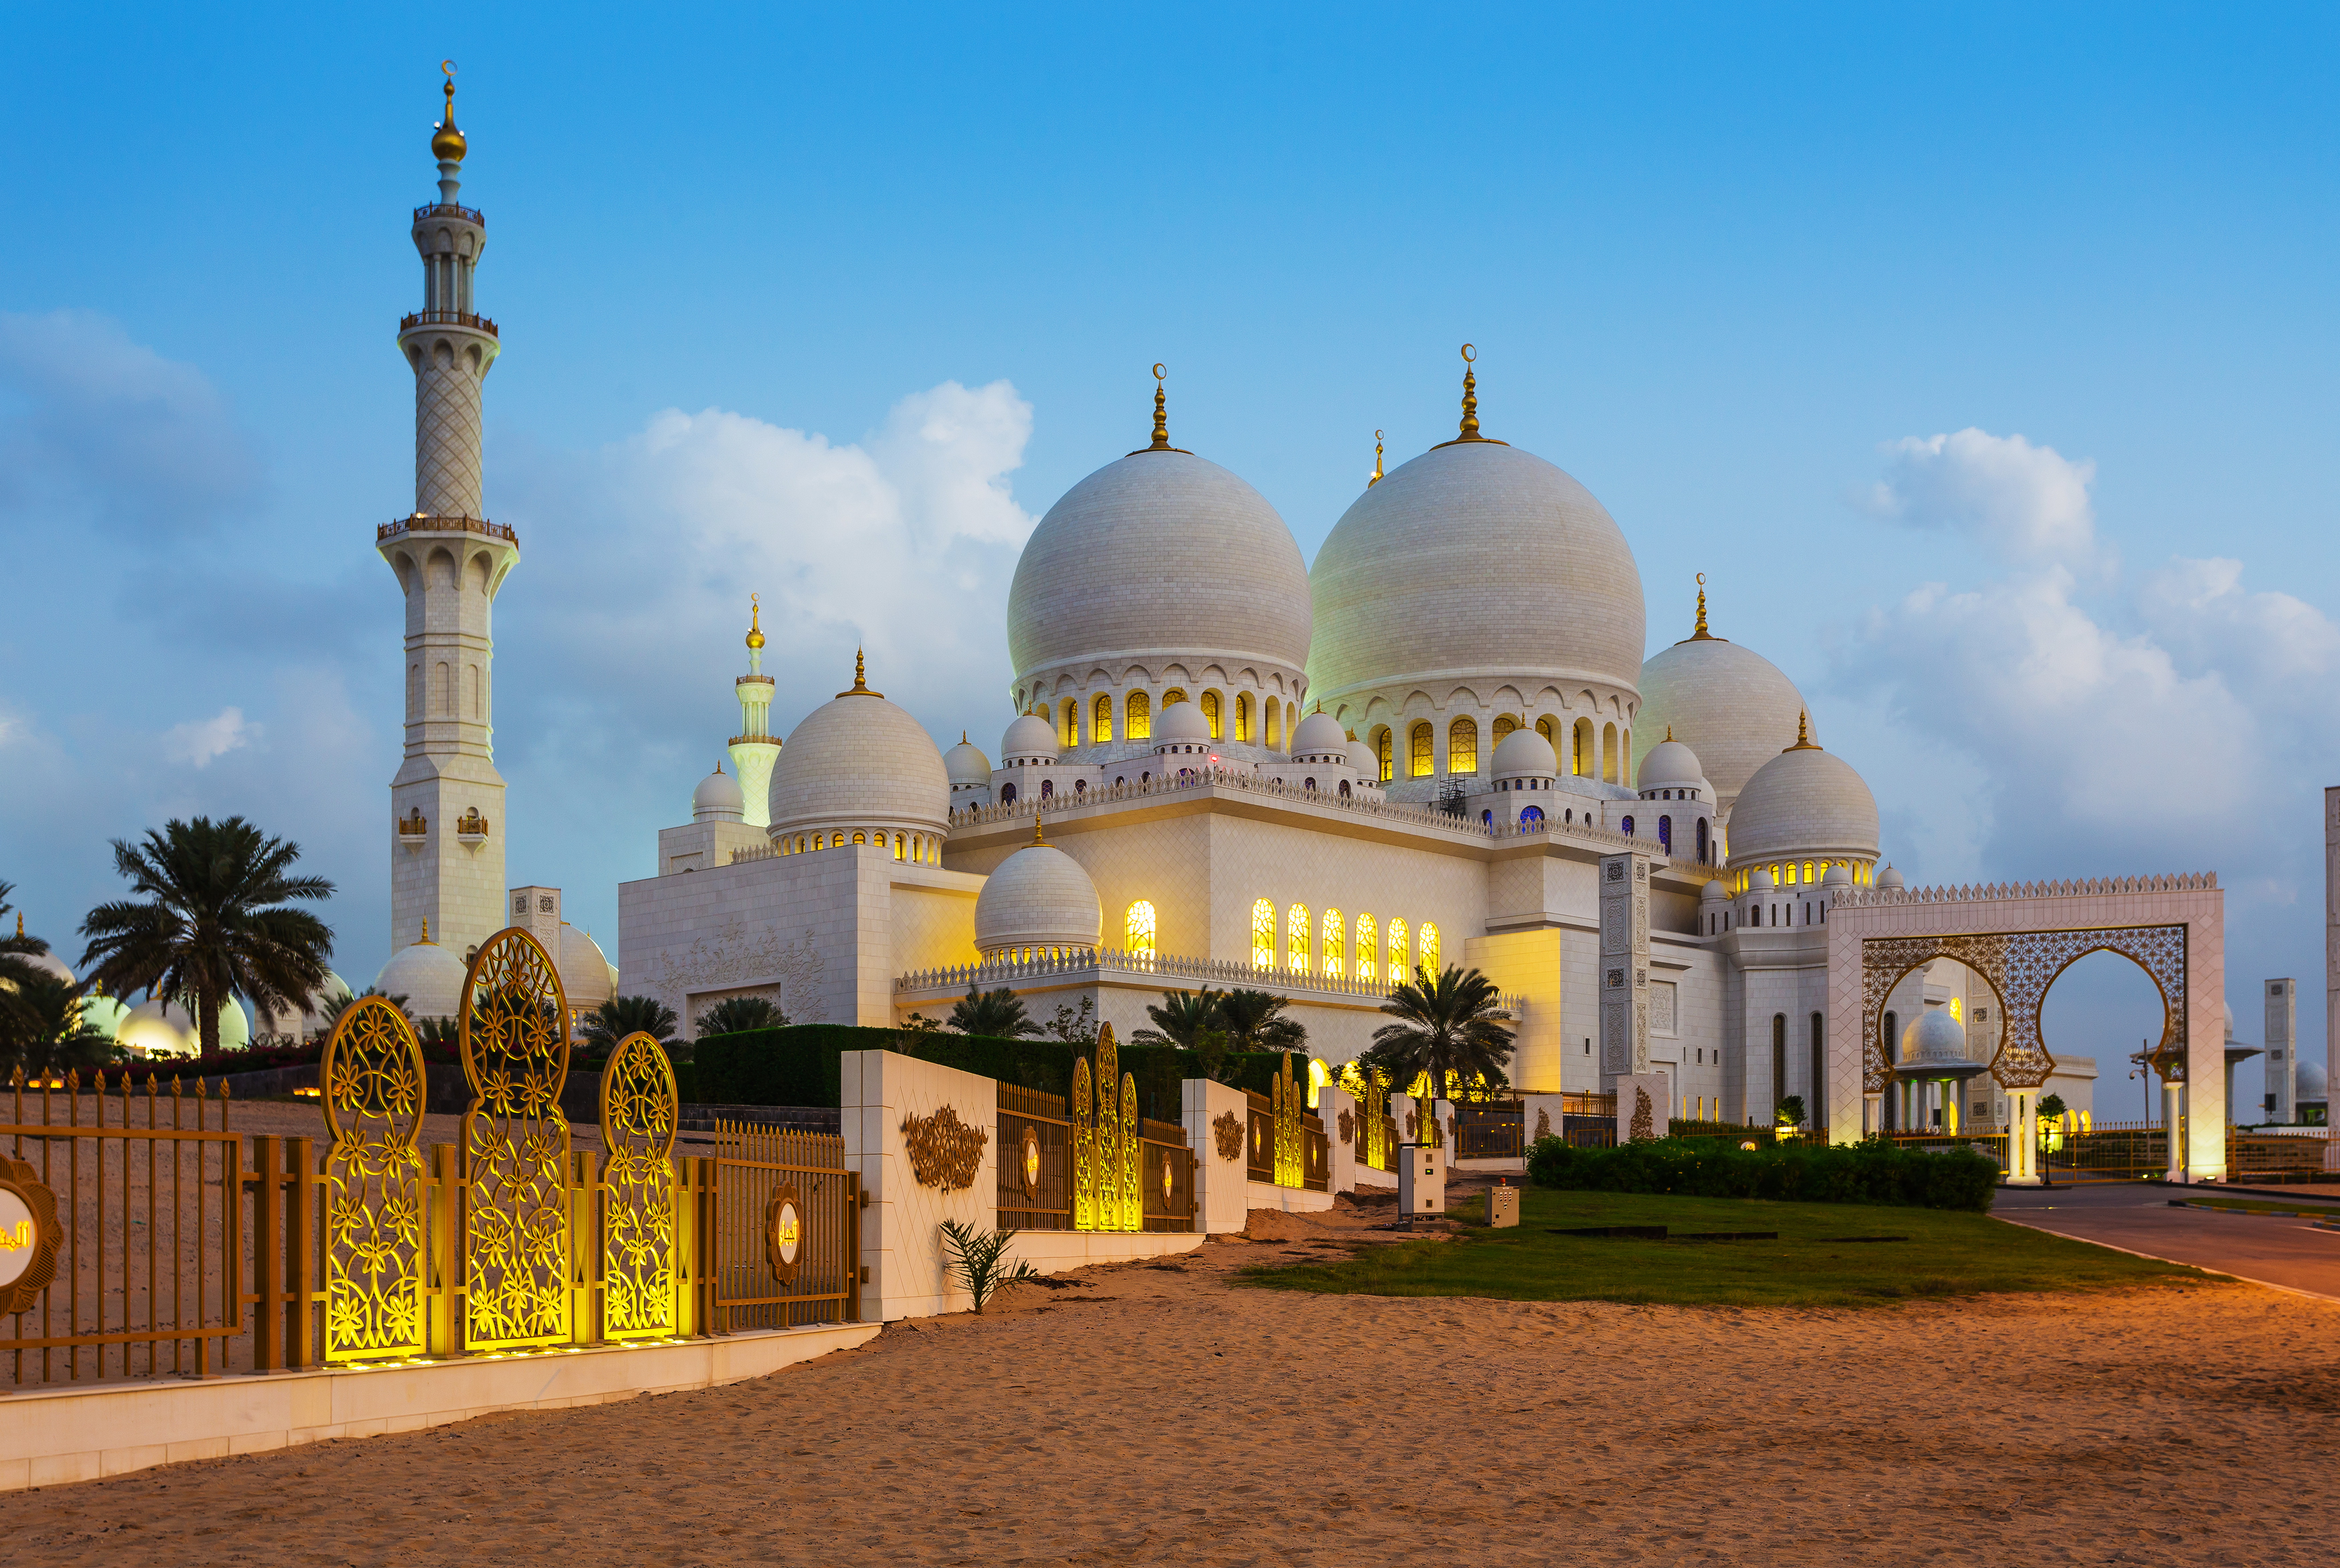 Арабские здания. Дворец шейха Зайда в Абу-Даби. Мечеть шейха Зайда Абу-Даби. Мечеть Масджид-Джаме Малайзия. Абу Даби архитектура.